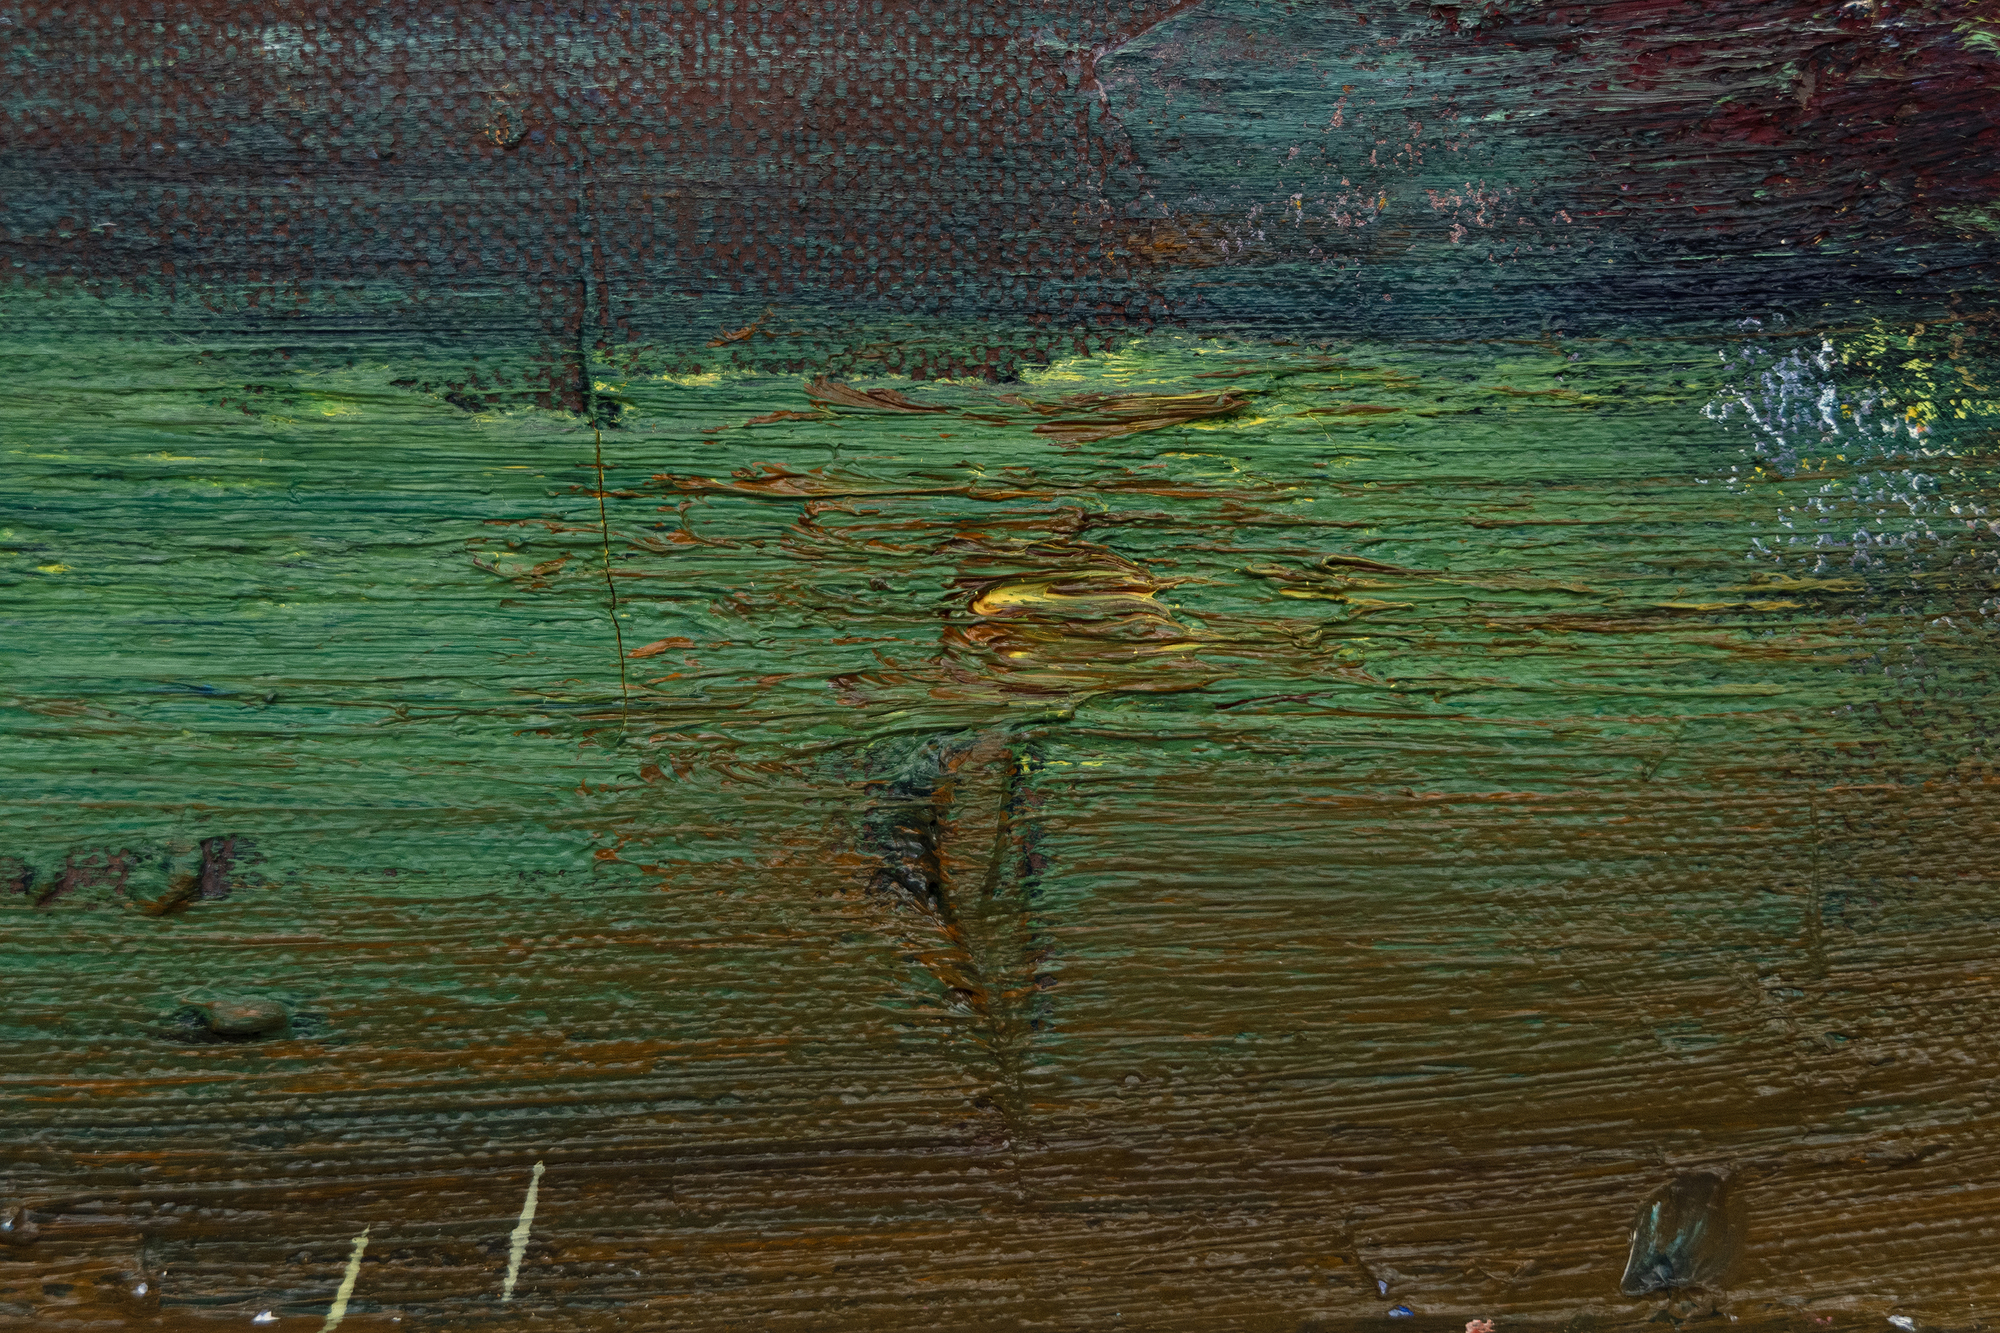 HANS HOFMANN - Untitled - oil on canvas - 25 x 30 1/4 in.